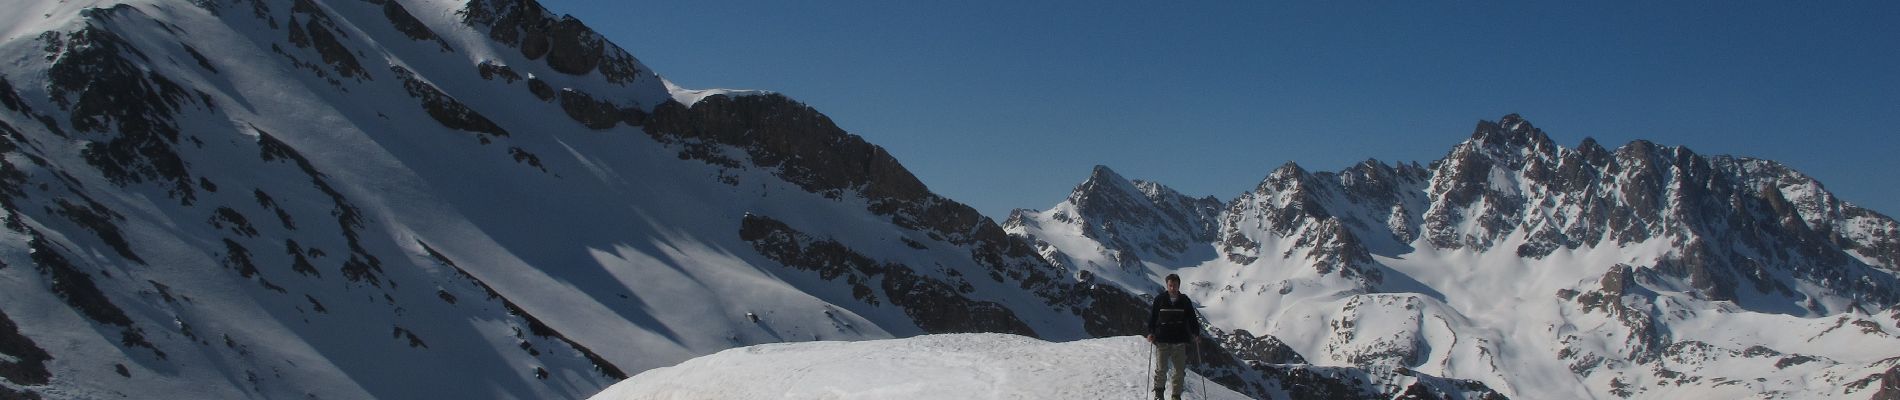 Tour Skiwanderen Saint-Paul-sur-Ubaye - L'alpet (Ski) - Photo